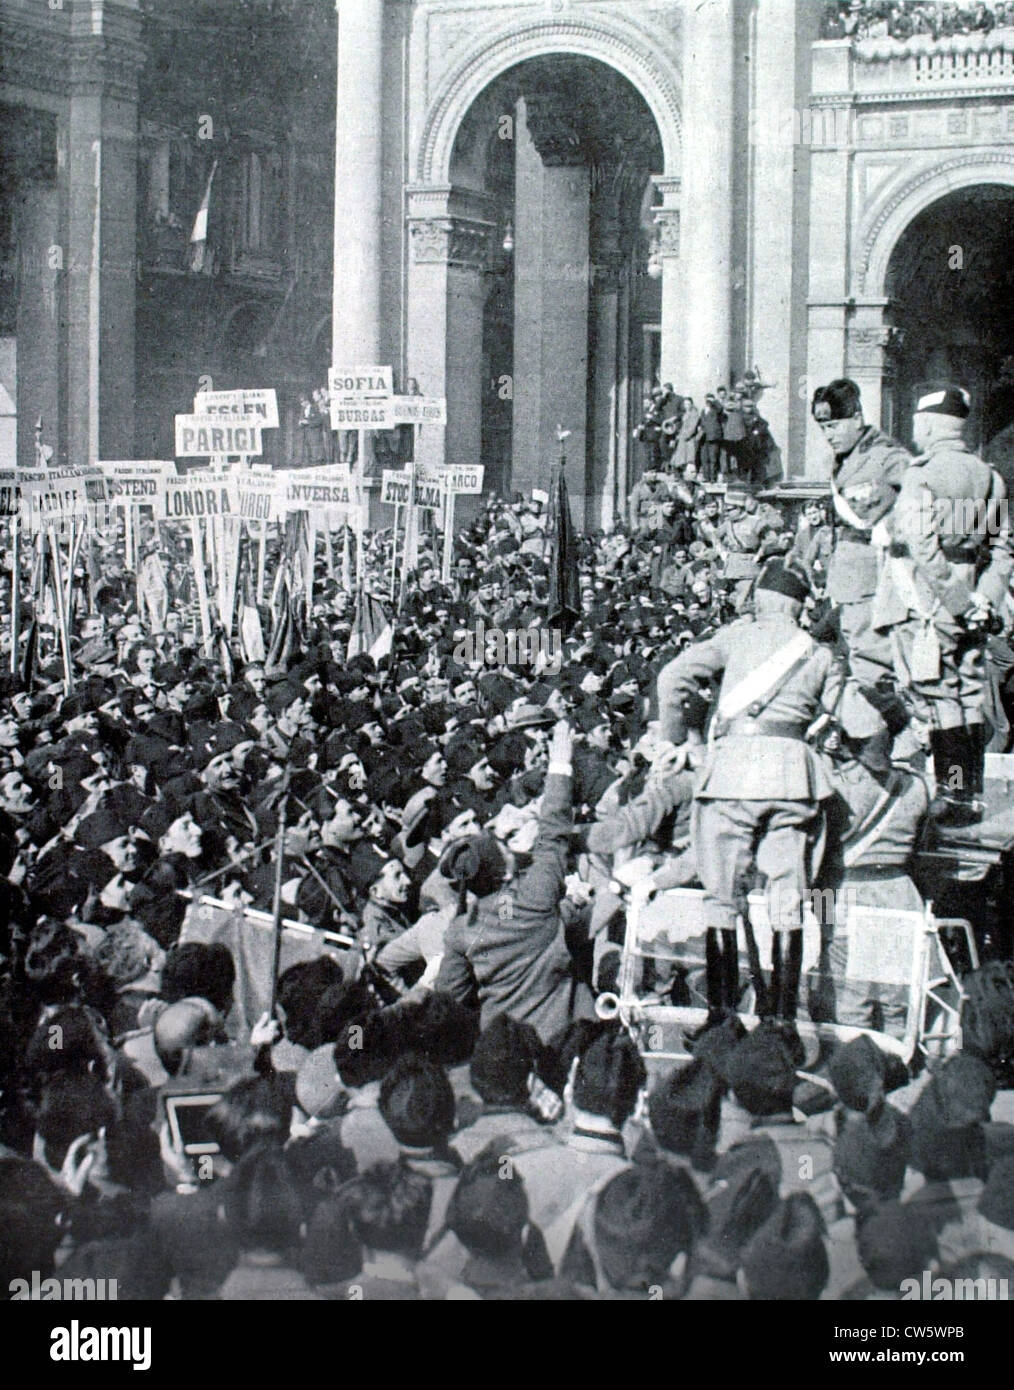 Fascist demonstration in Milan, 1925 Stock Photo - Alamy